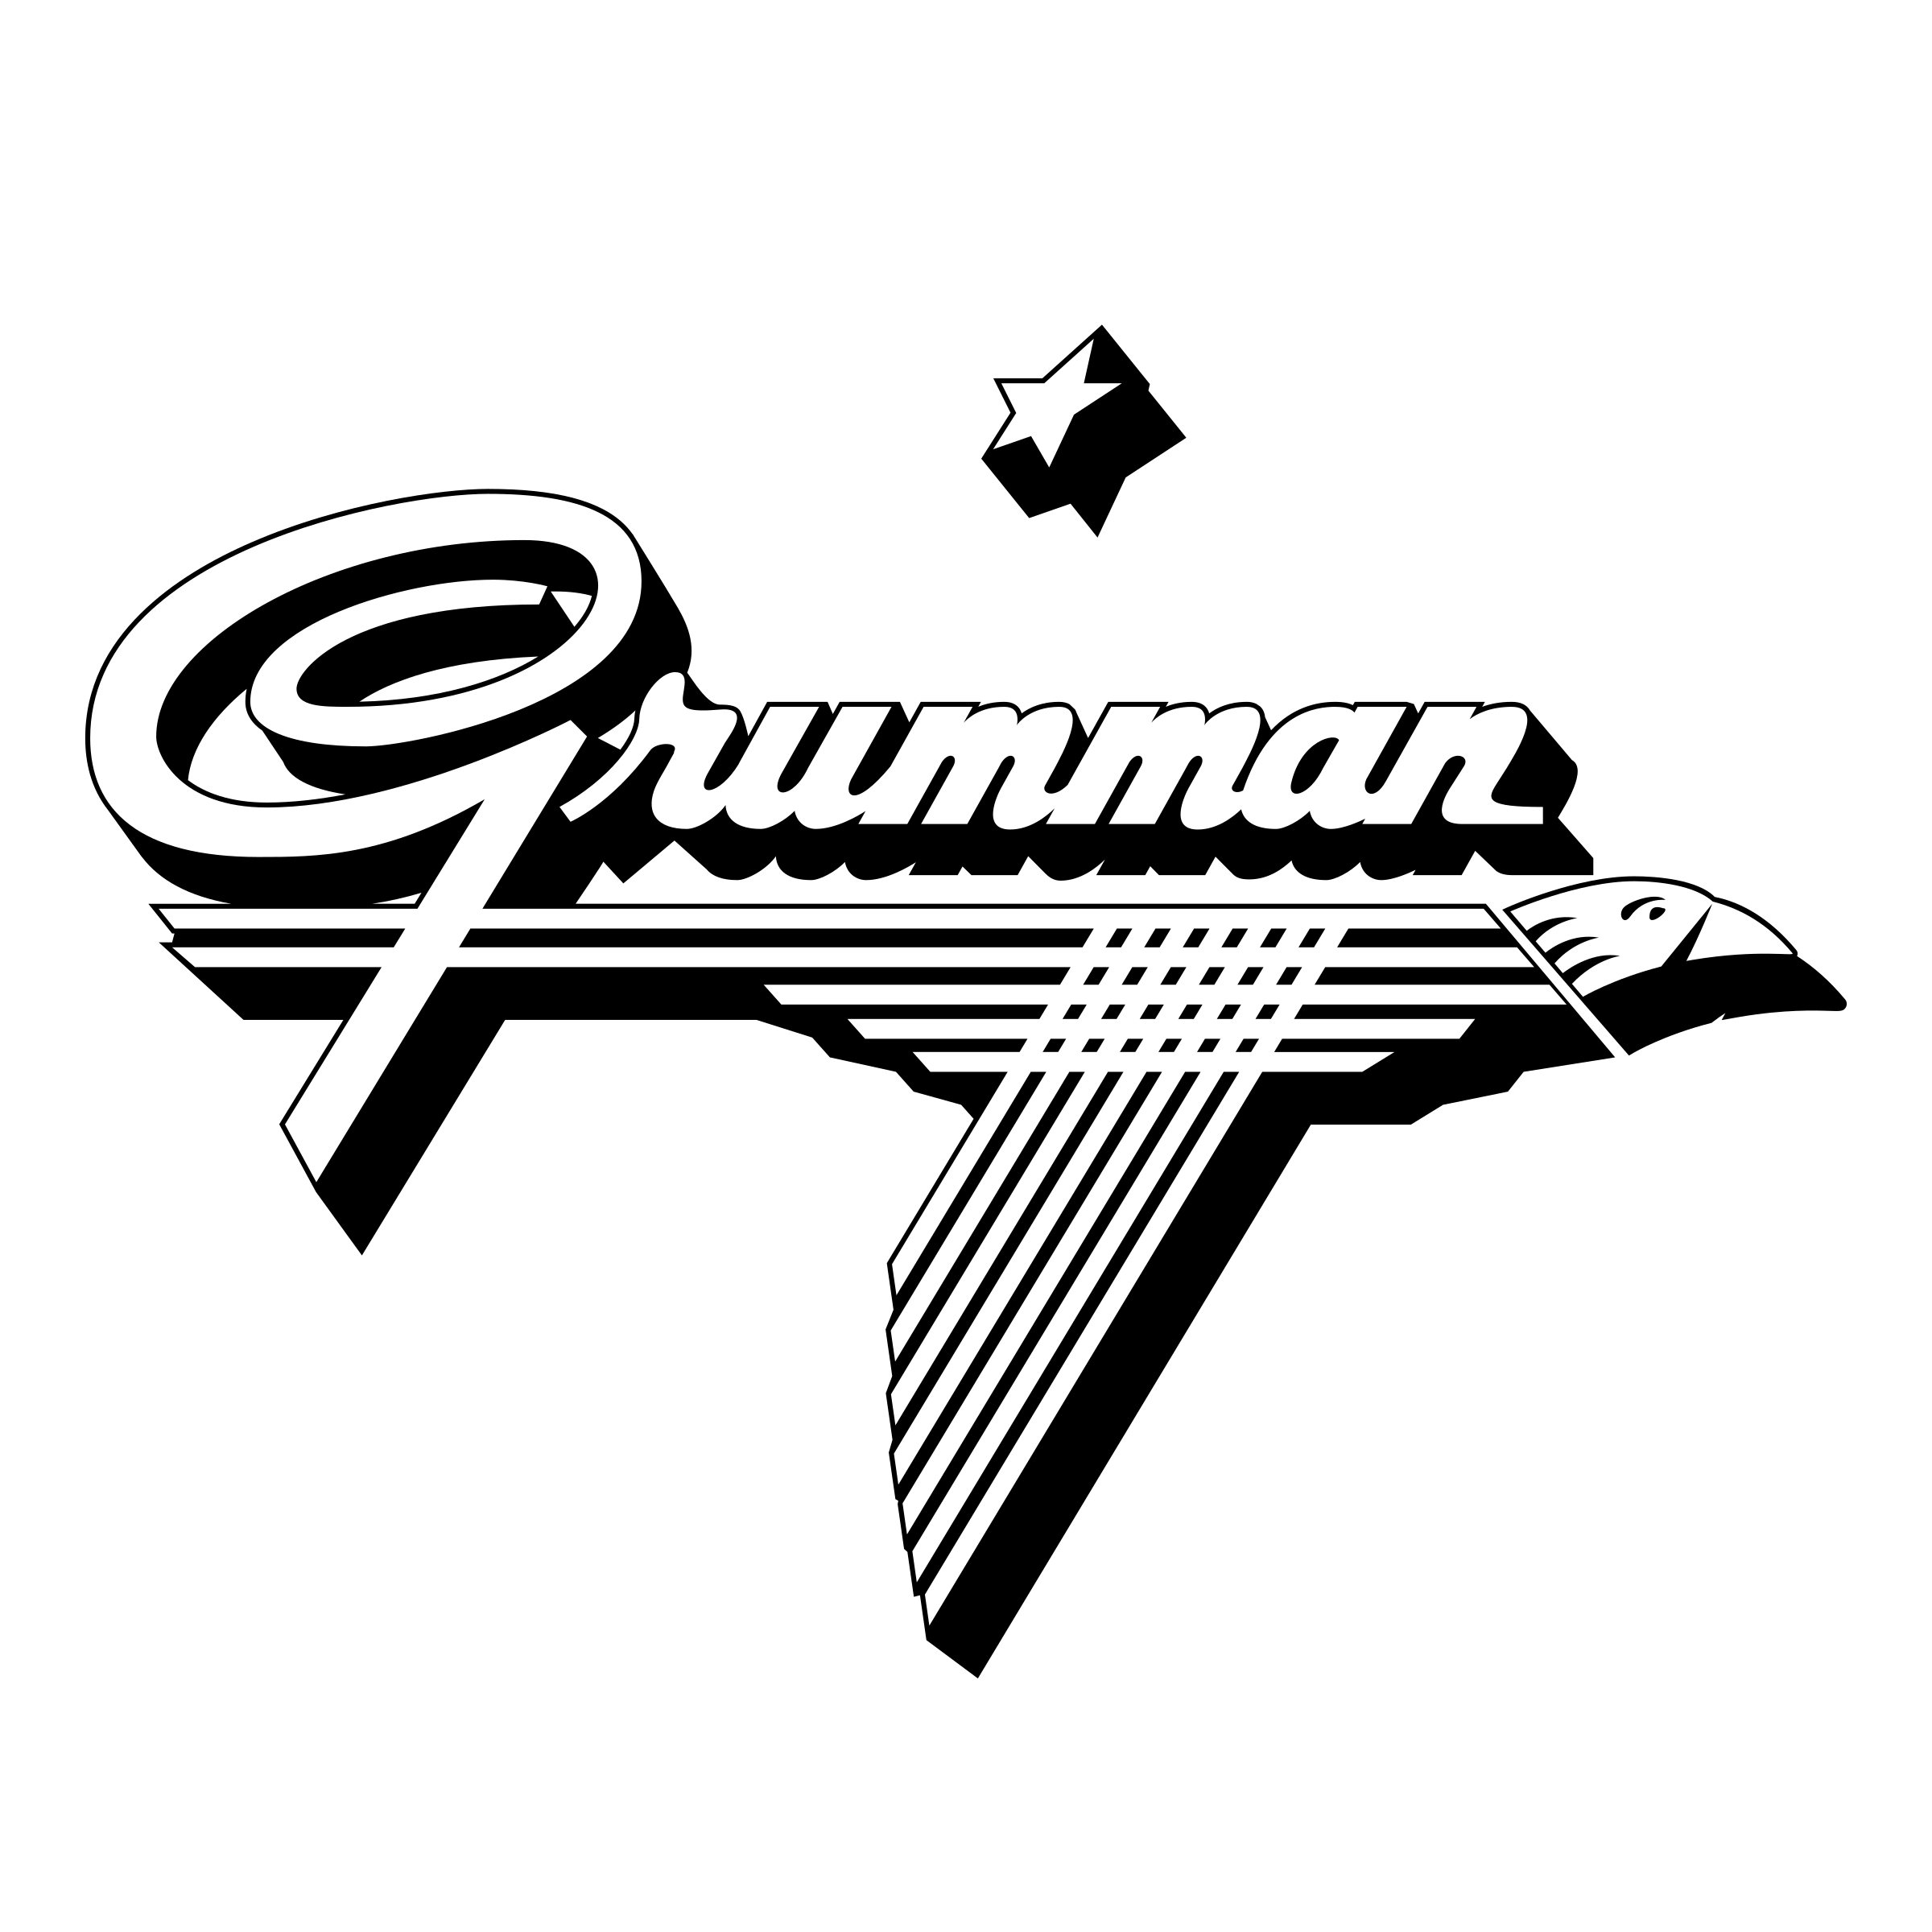 Grumman Logo - Grumman Logo PNG Transparent & SVG Vector - Freebie Supply